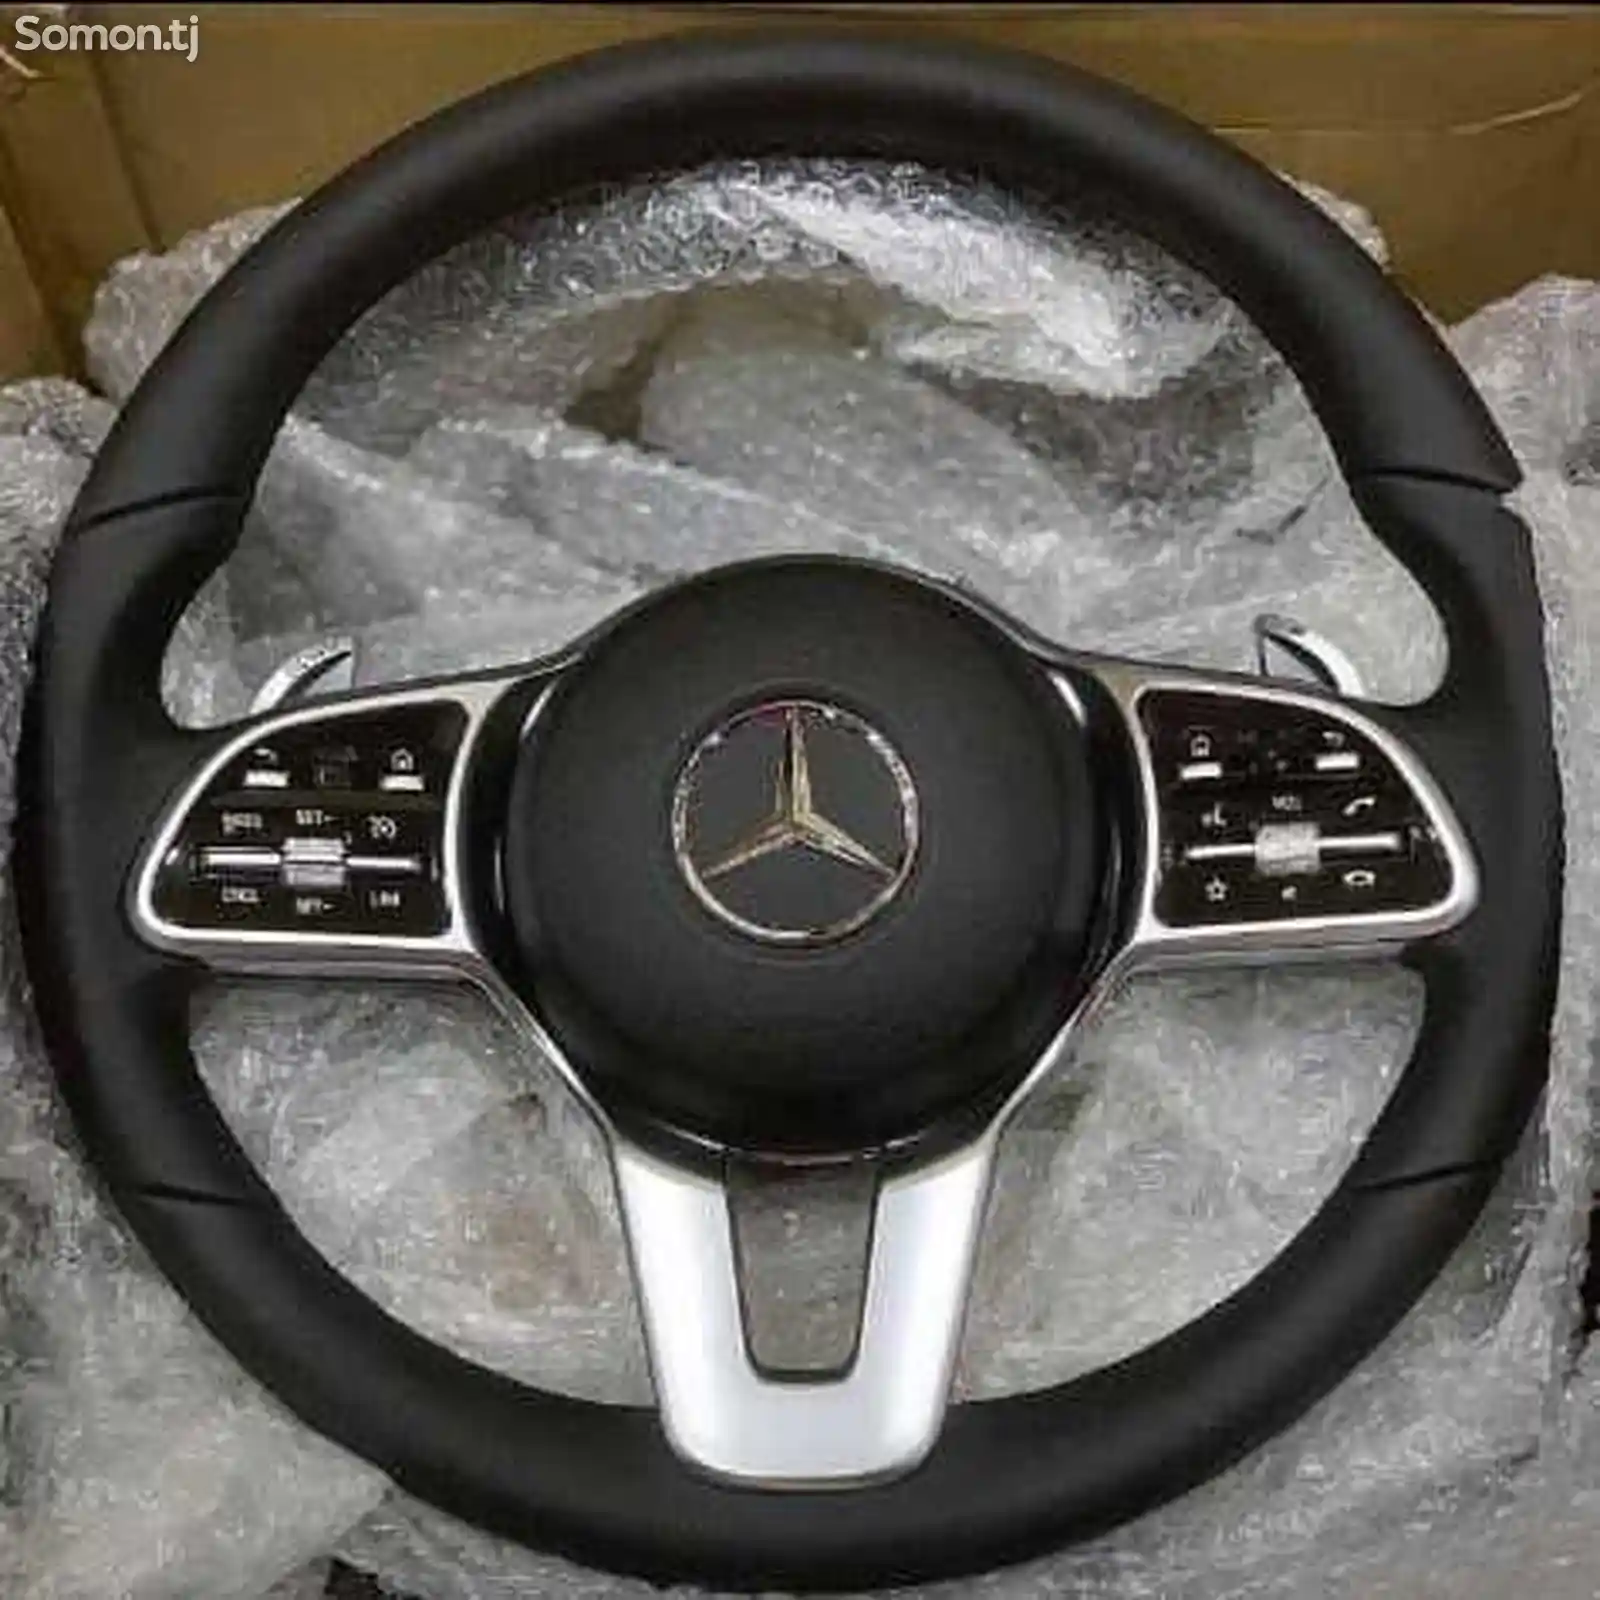 Руль. Mercedes Benz